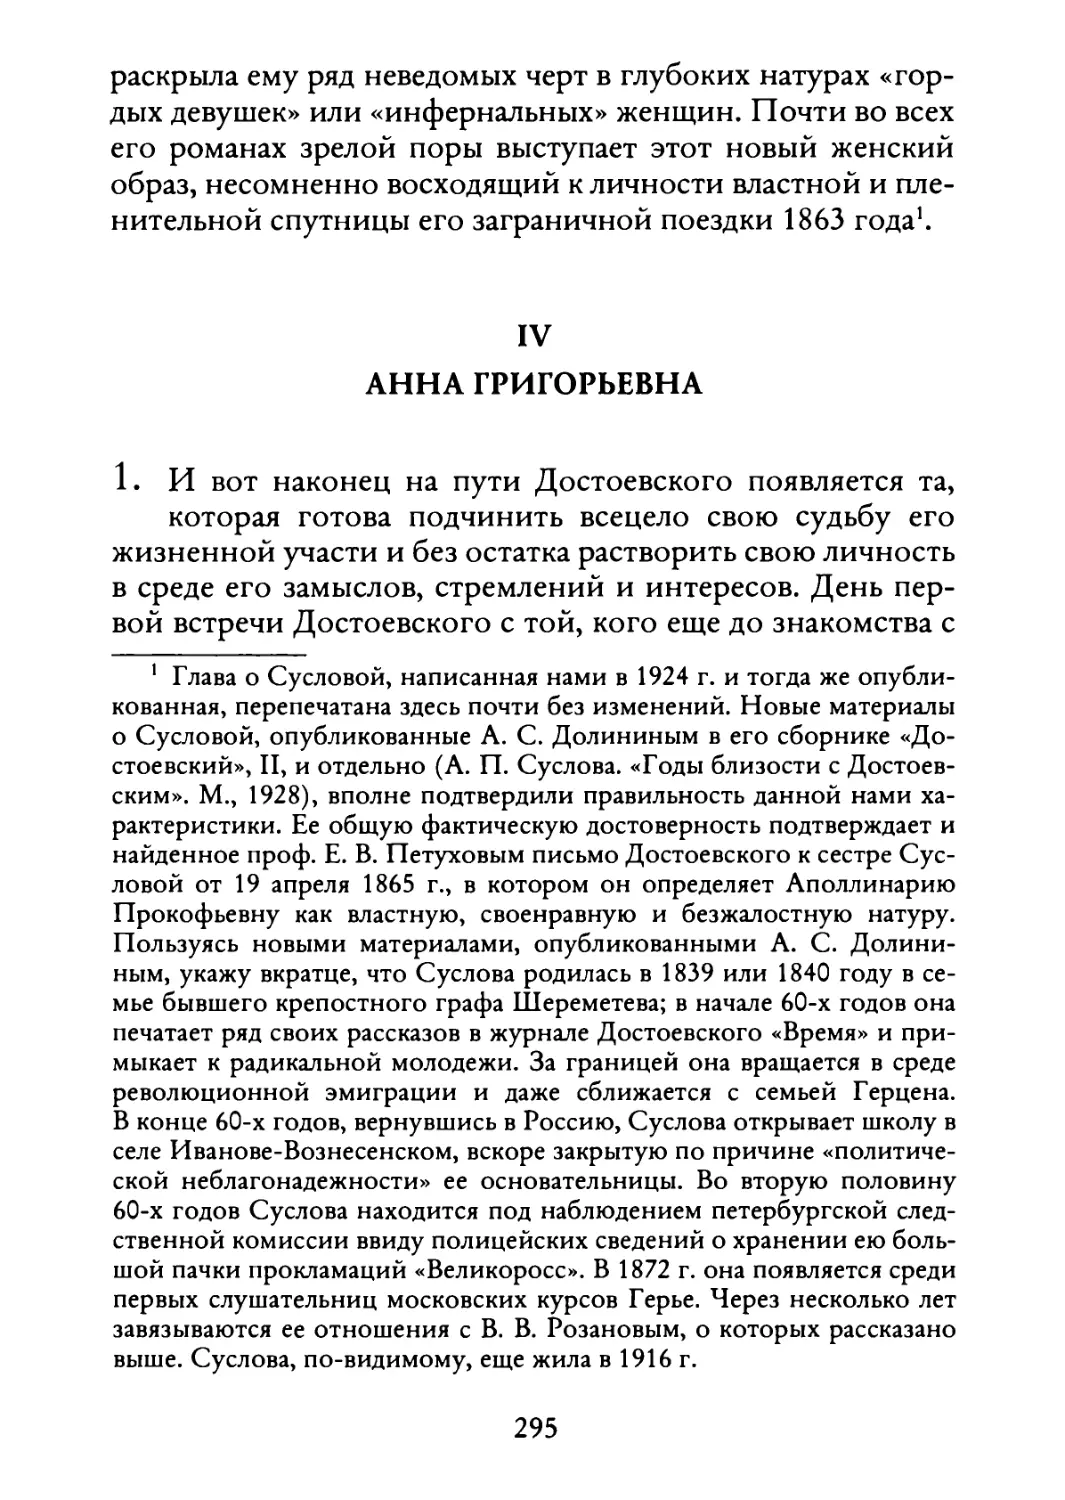 IV. Анна Григорьевна